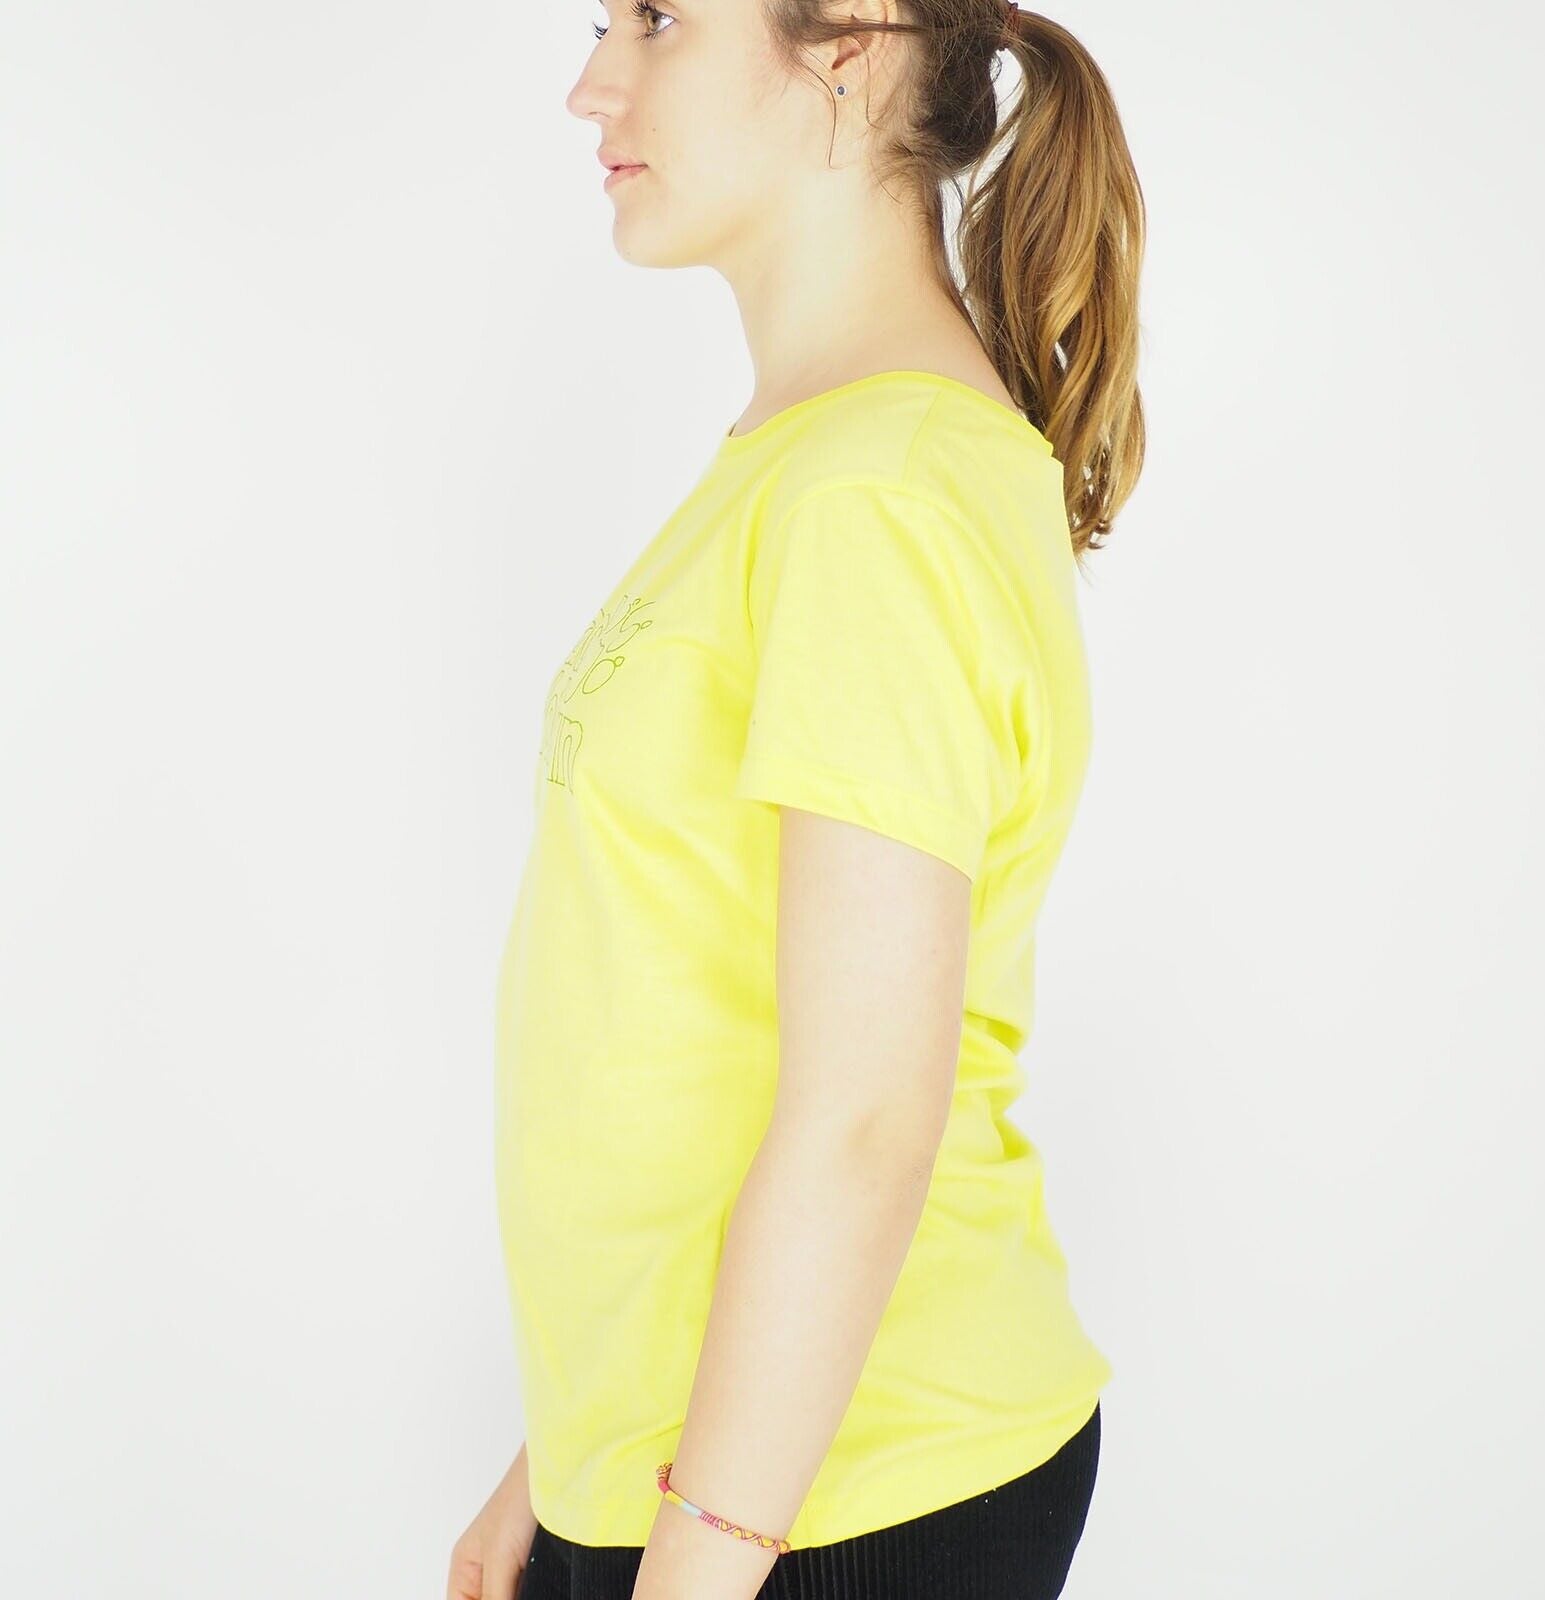 Womens Jack Wolfskin New 1804681 Bright Absinth Yellow Regular Fit T-Shirt